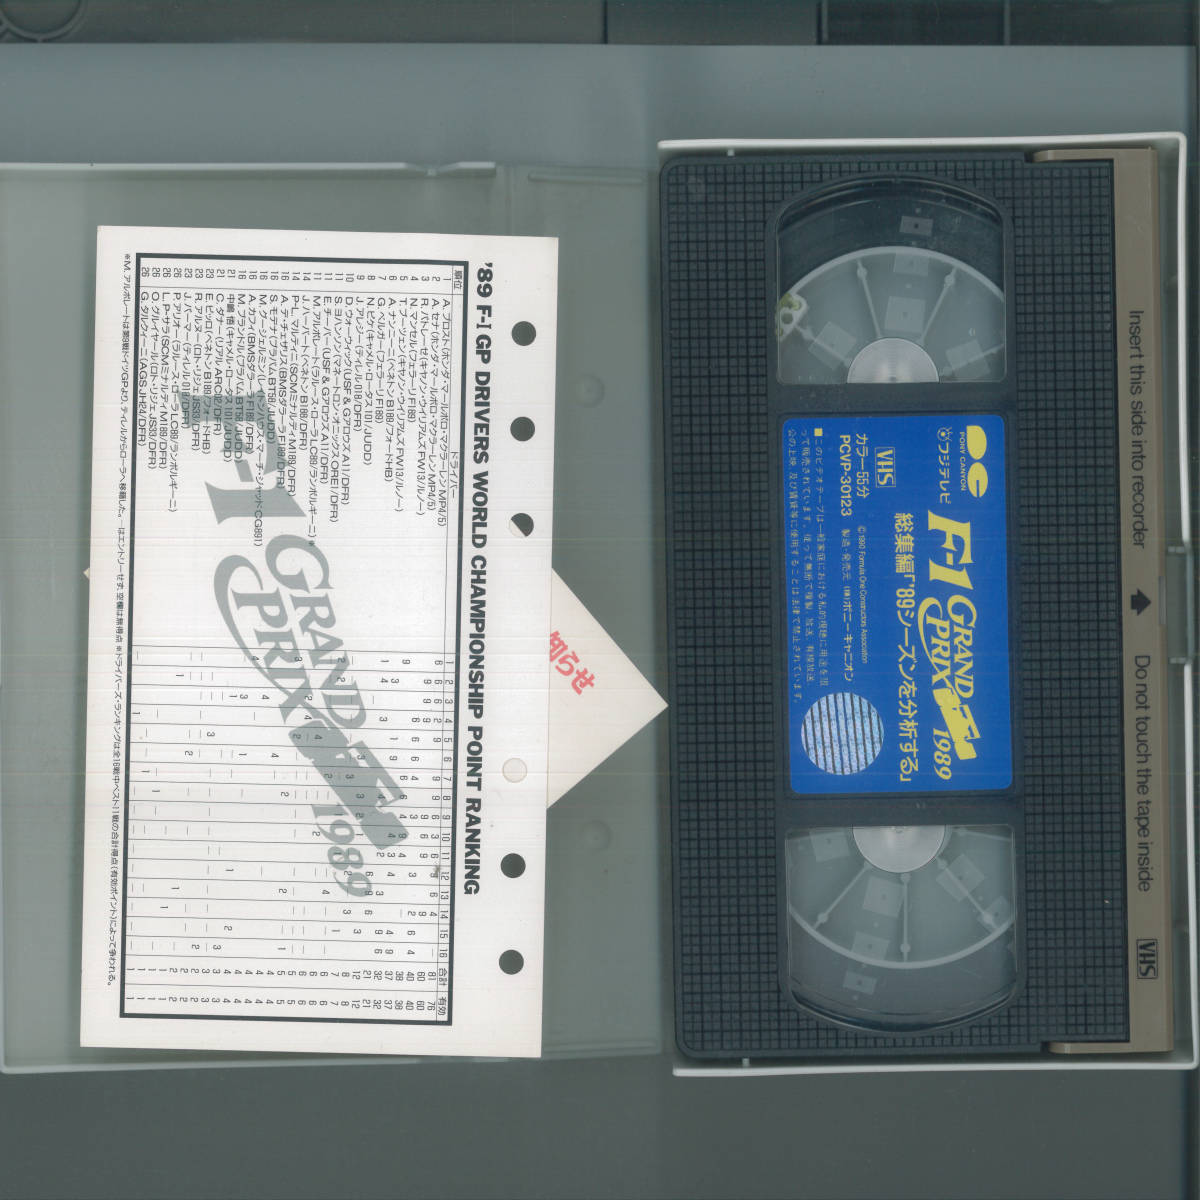 F1GrandPrix89 общий сборник [VHS] форма : VHS mi